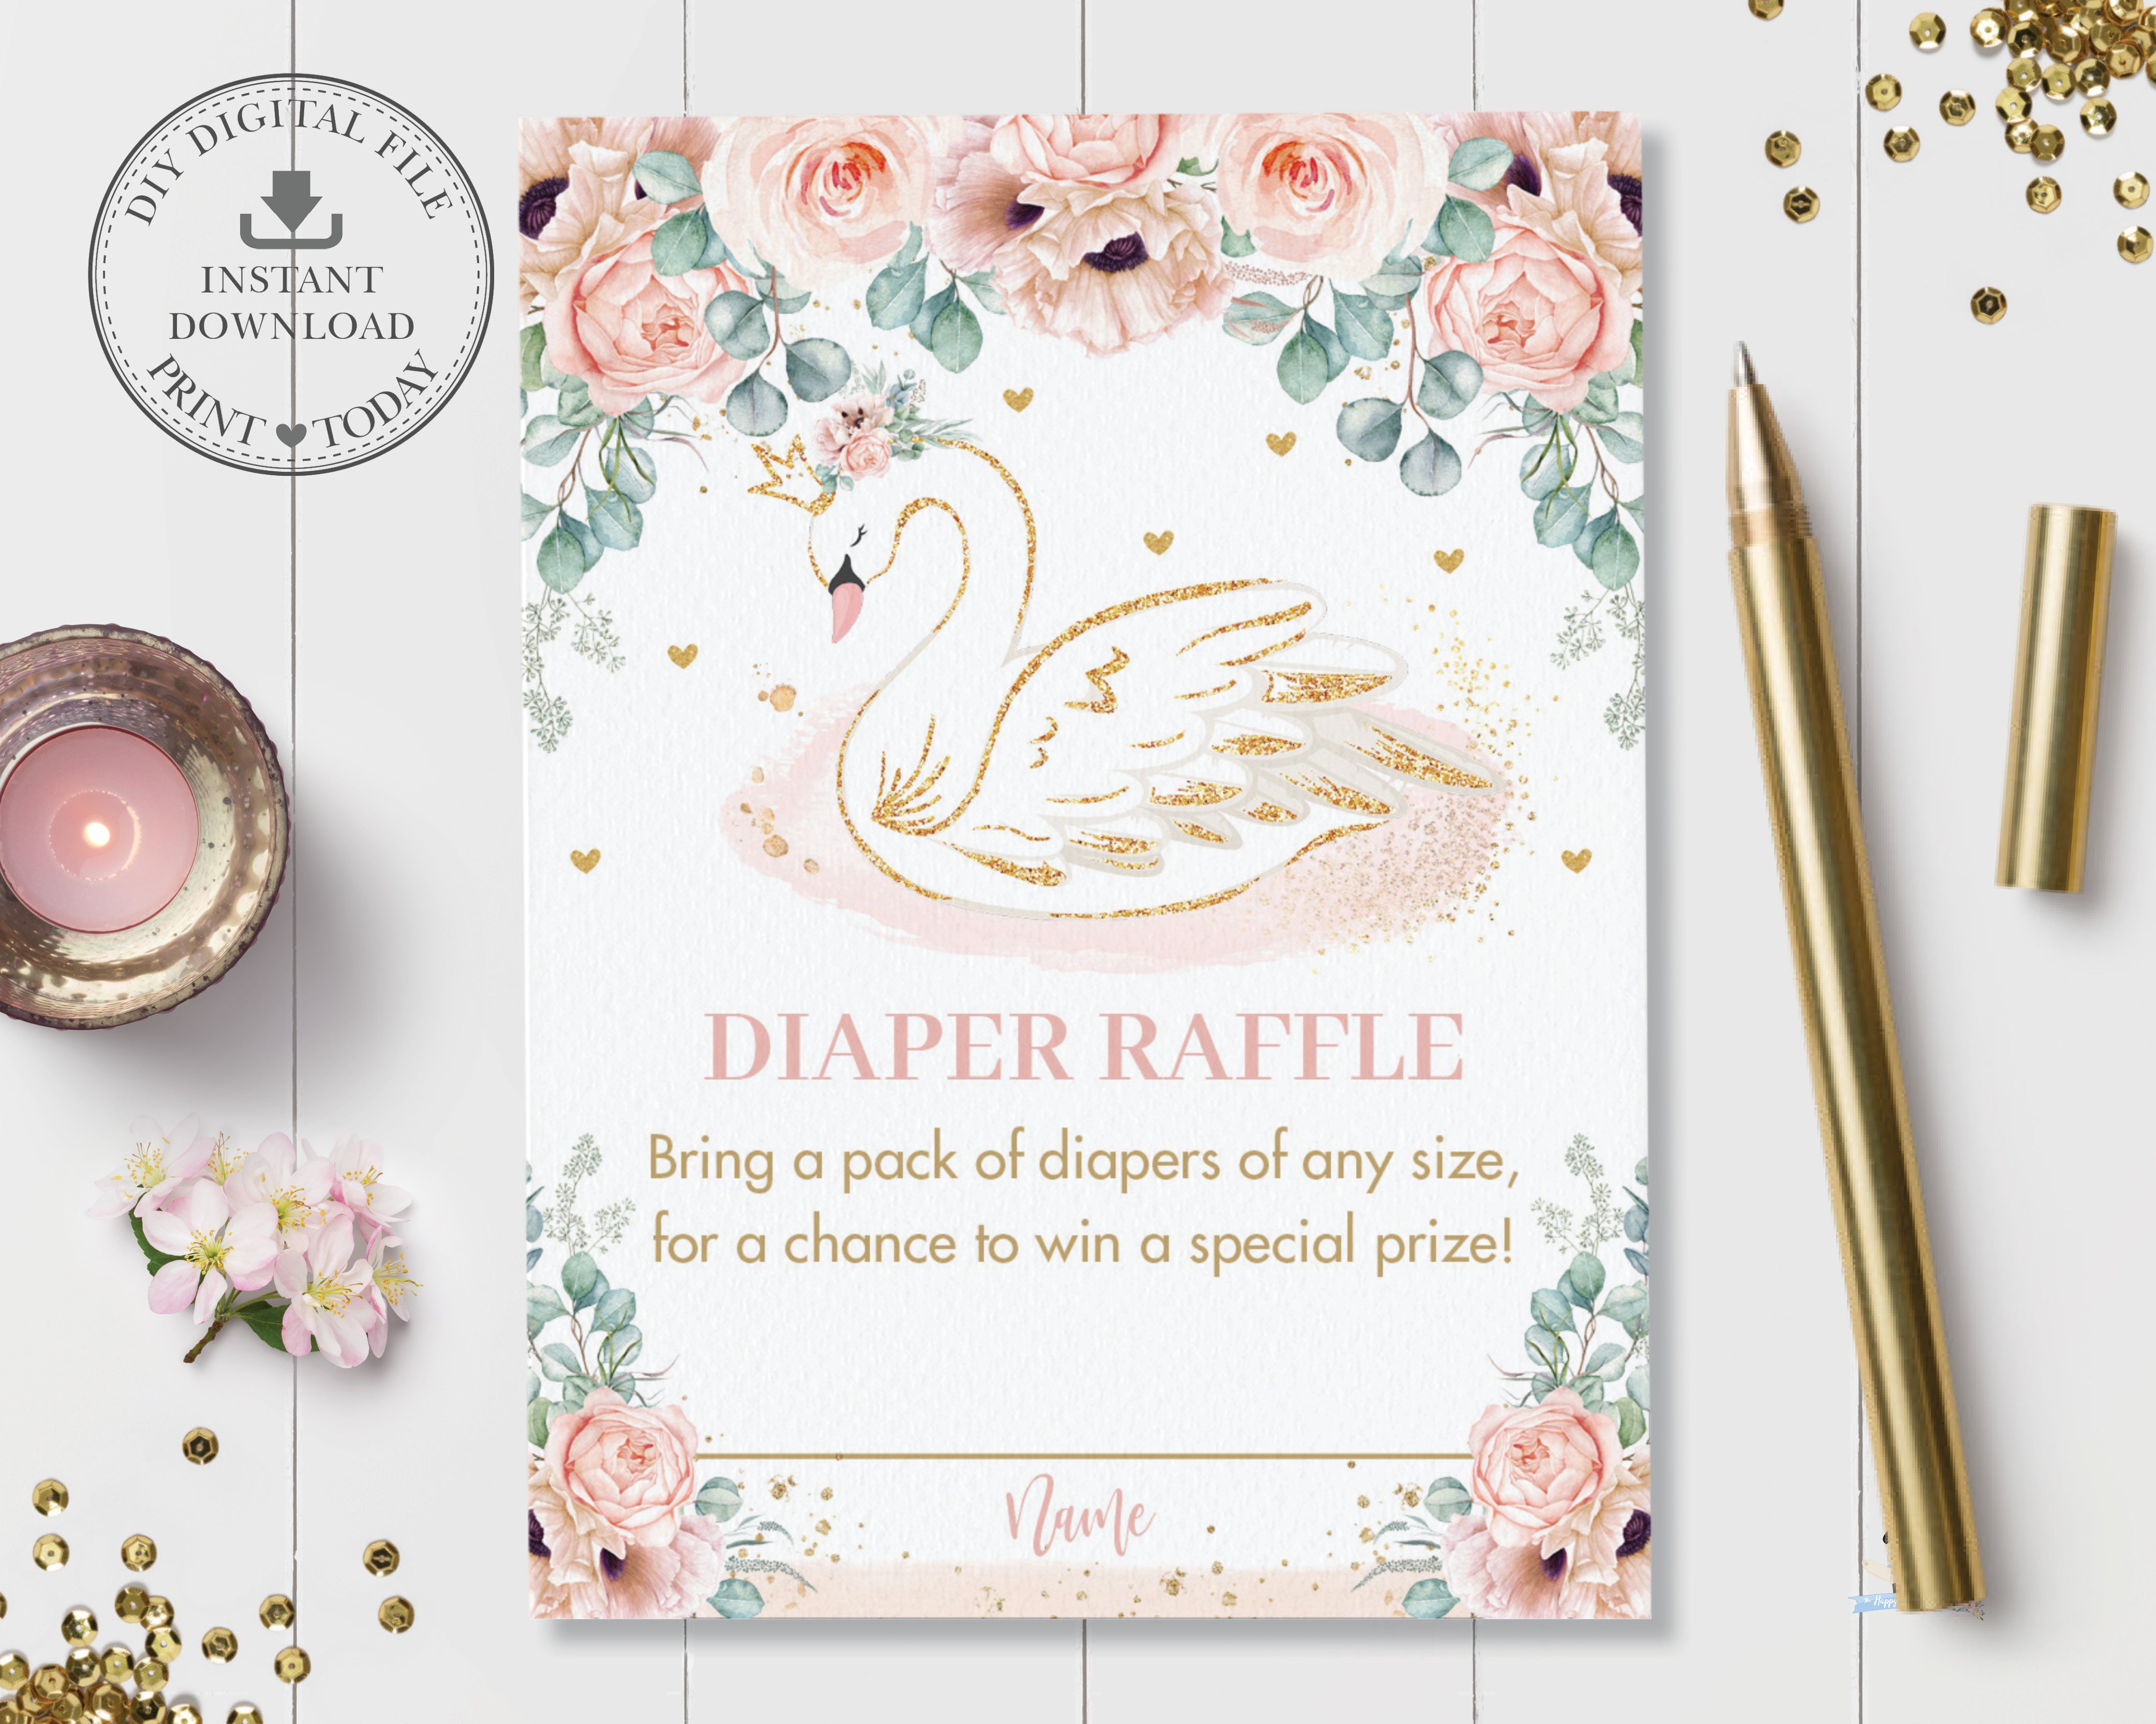 invitations-announcements-diaper-raffle-sign-and-diaper-raffle